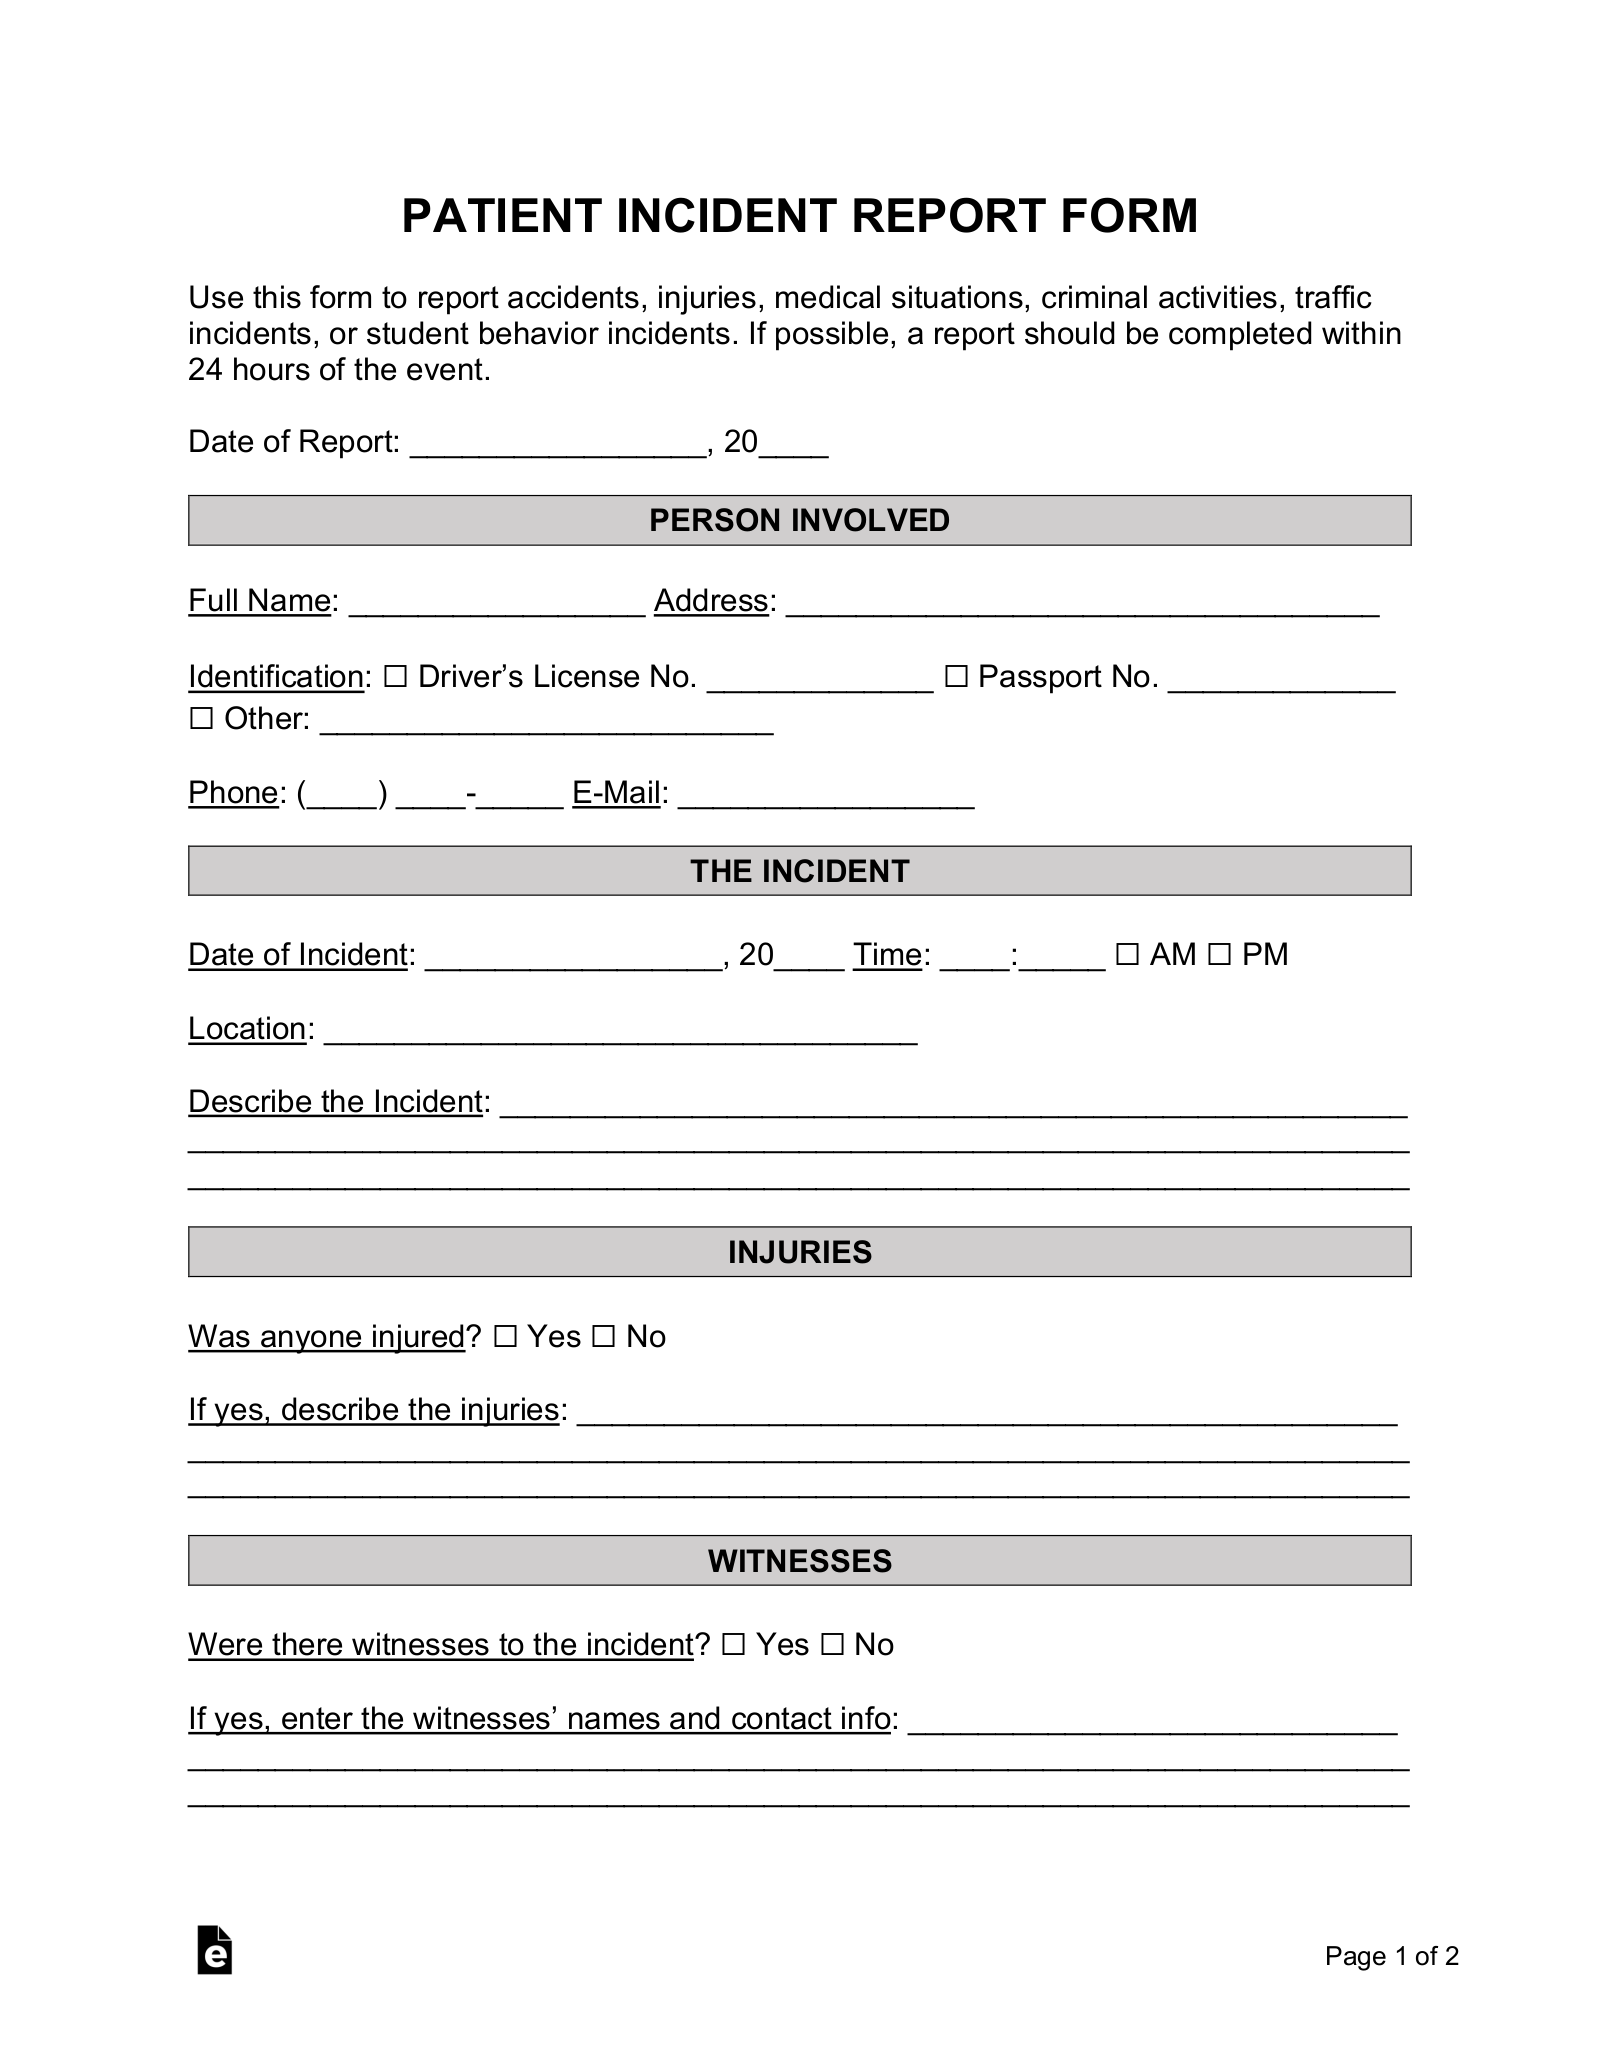 Patient (Medical) Incident Report Form